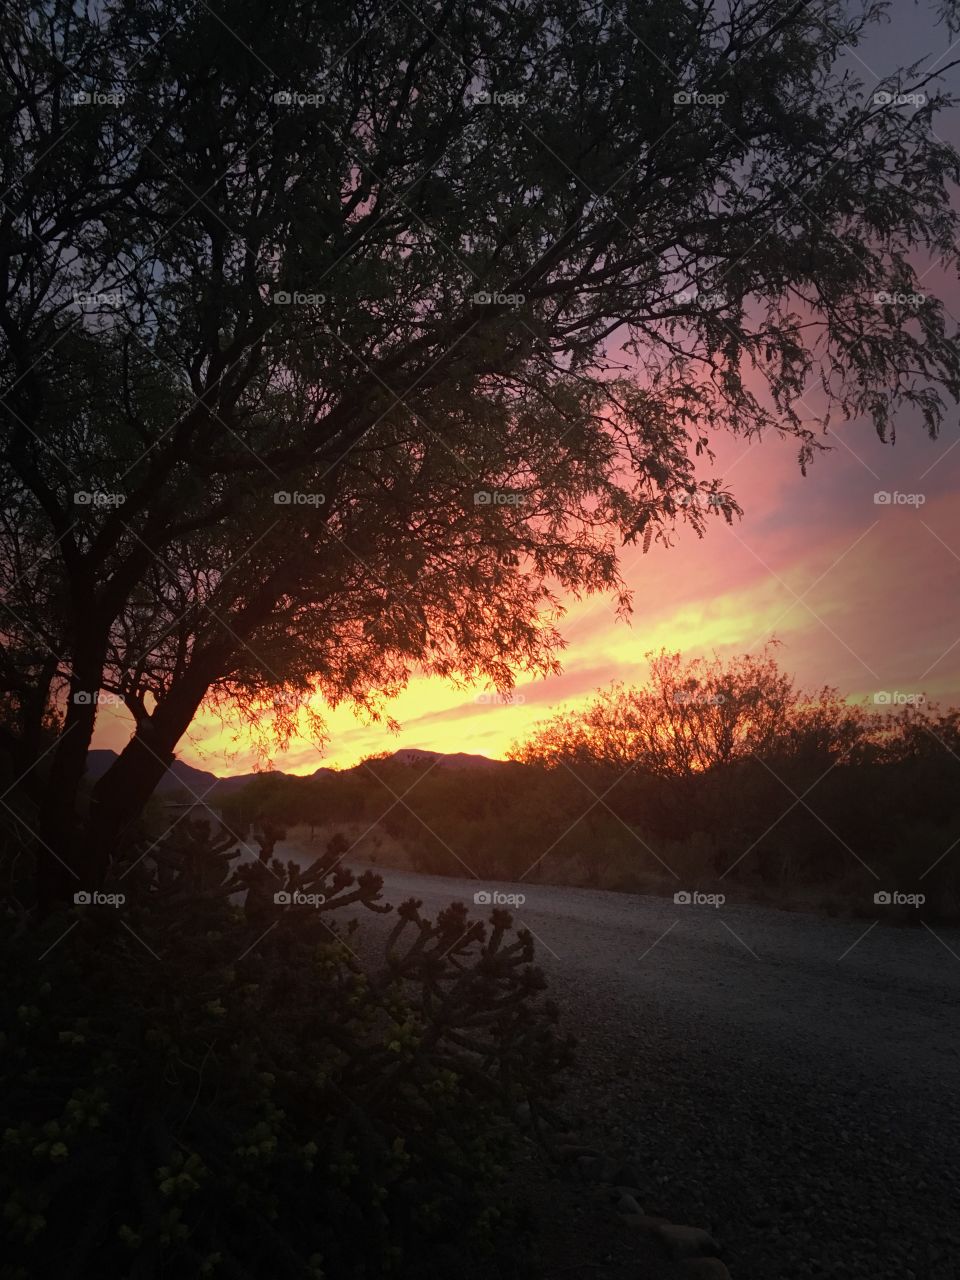 Sunset in Arizona over the huachuca mountains